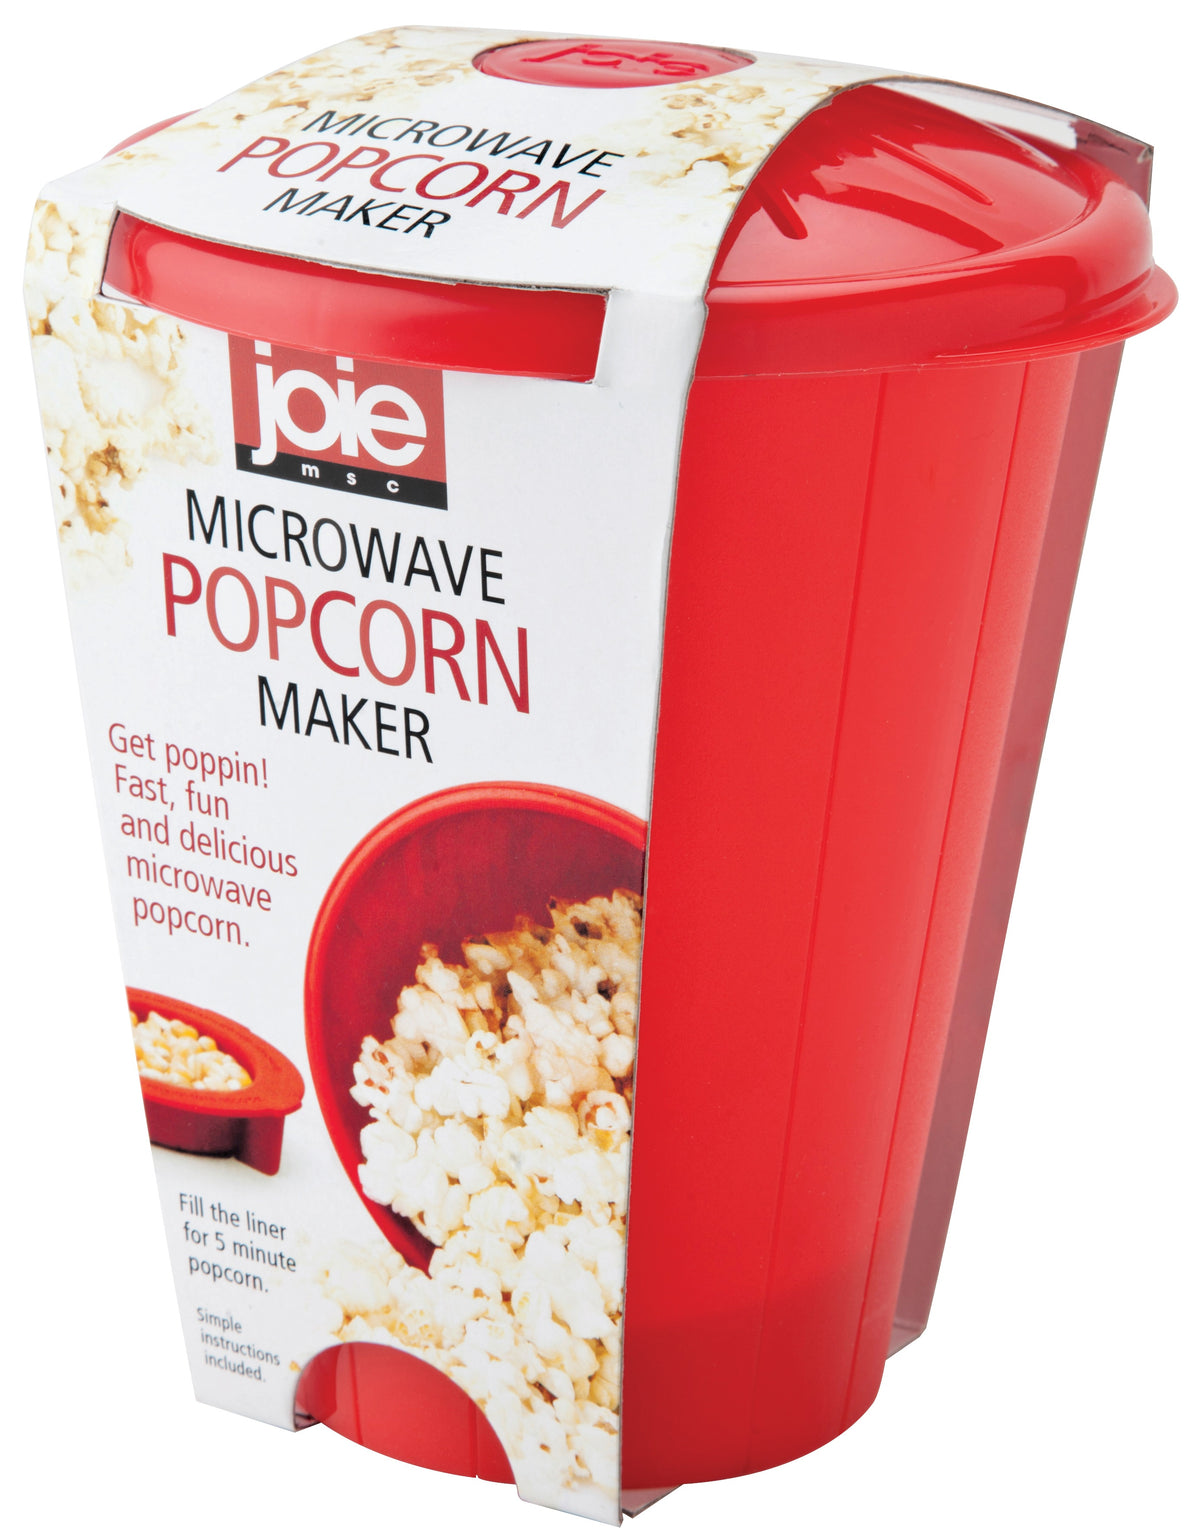 Joie MSC 14001 Microwave Popcorn Maker, Red